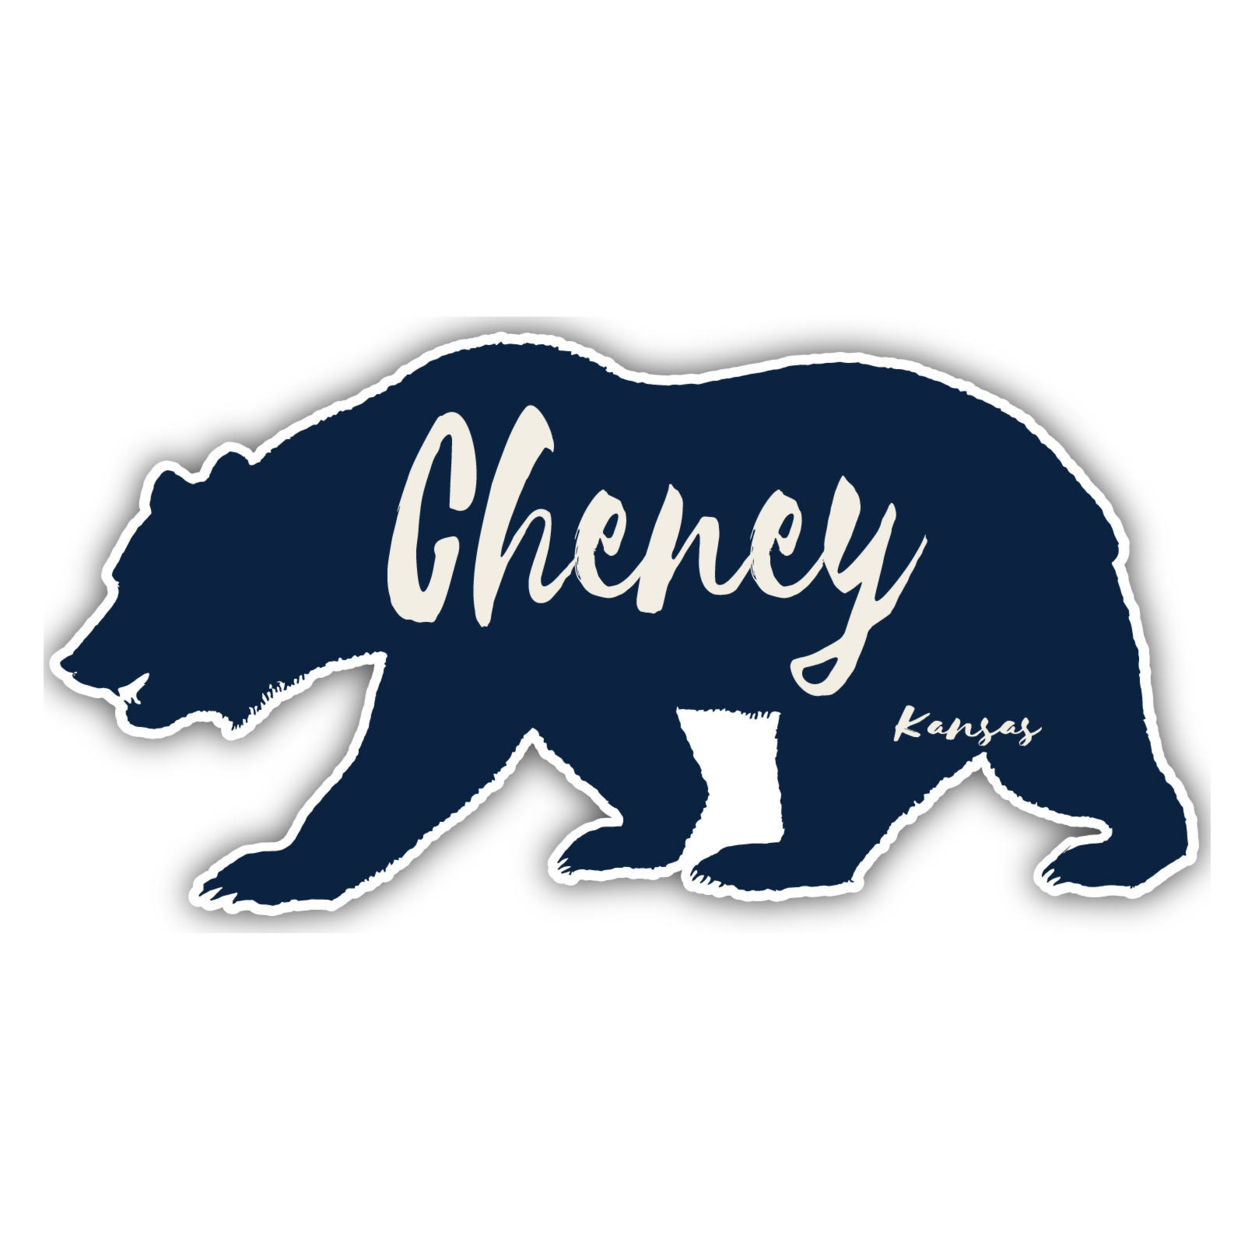 Cheney Kansas Souvenir Decorative Stickers (Choose Theme And Size) - Single Unit, 10-Inch, Bear